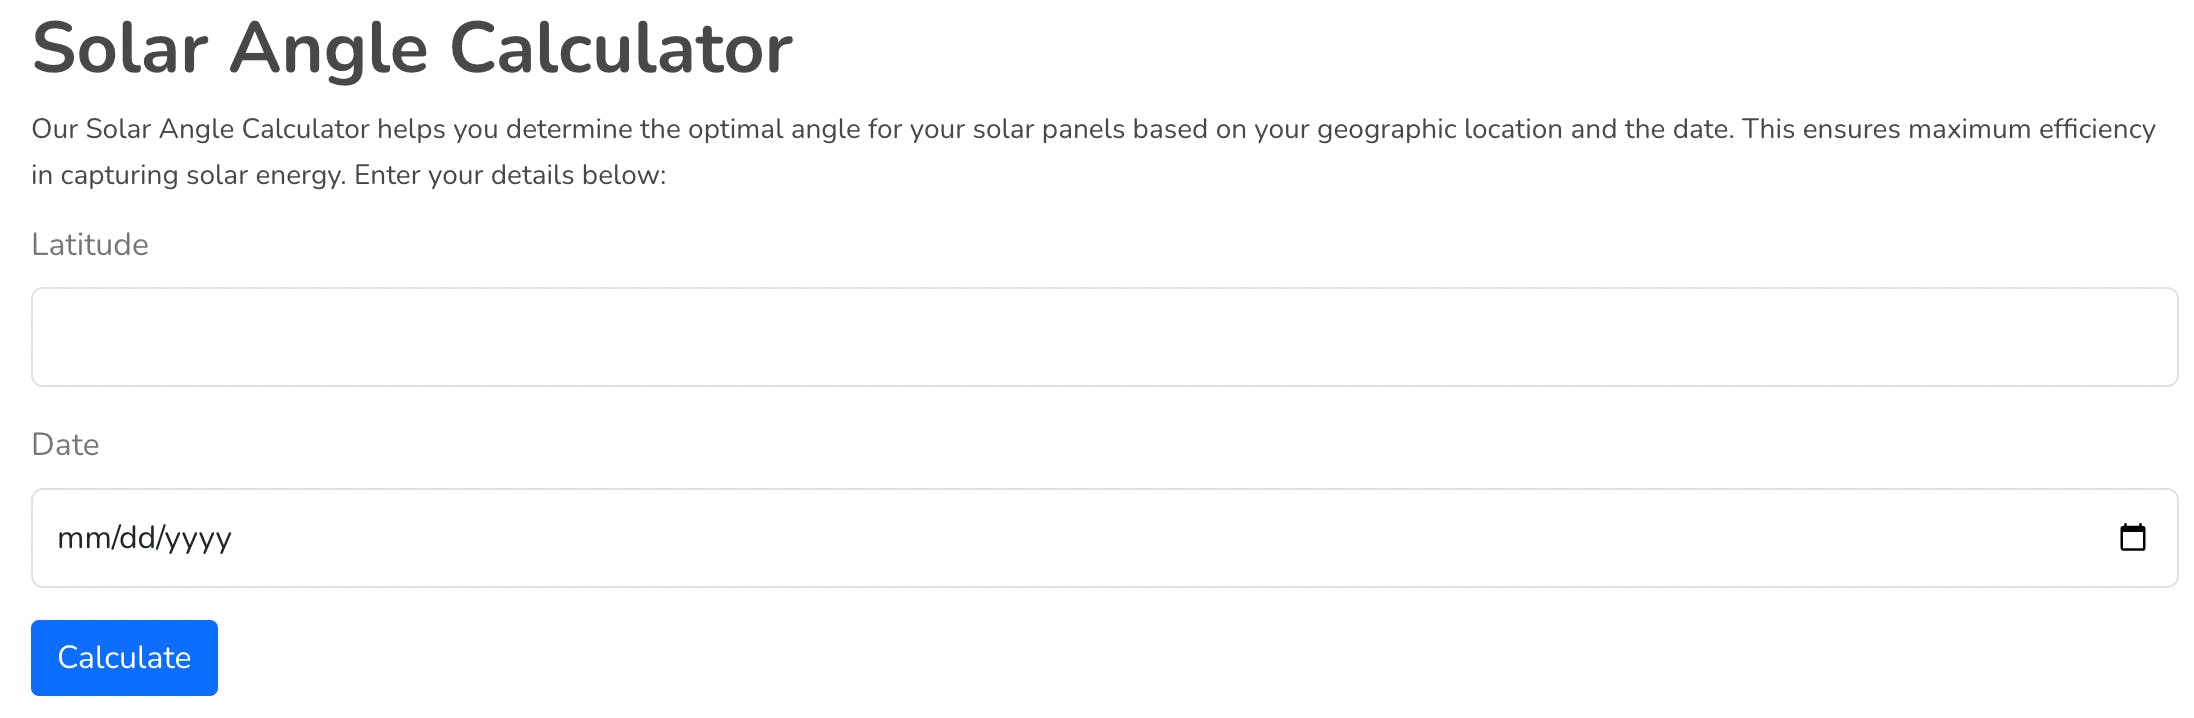 Solar Angle Calculator media 1